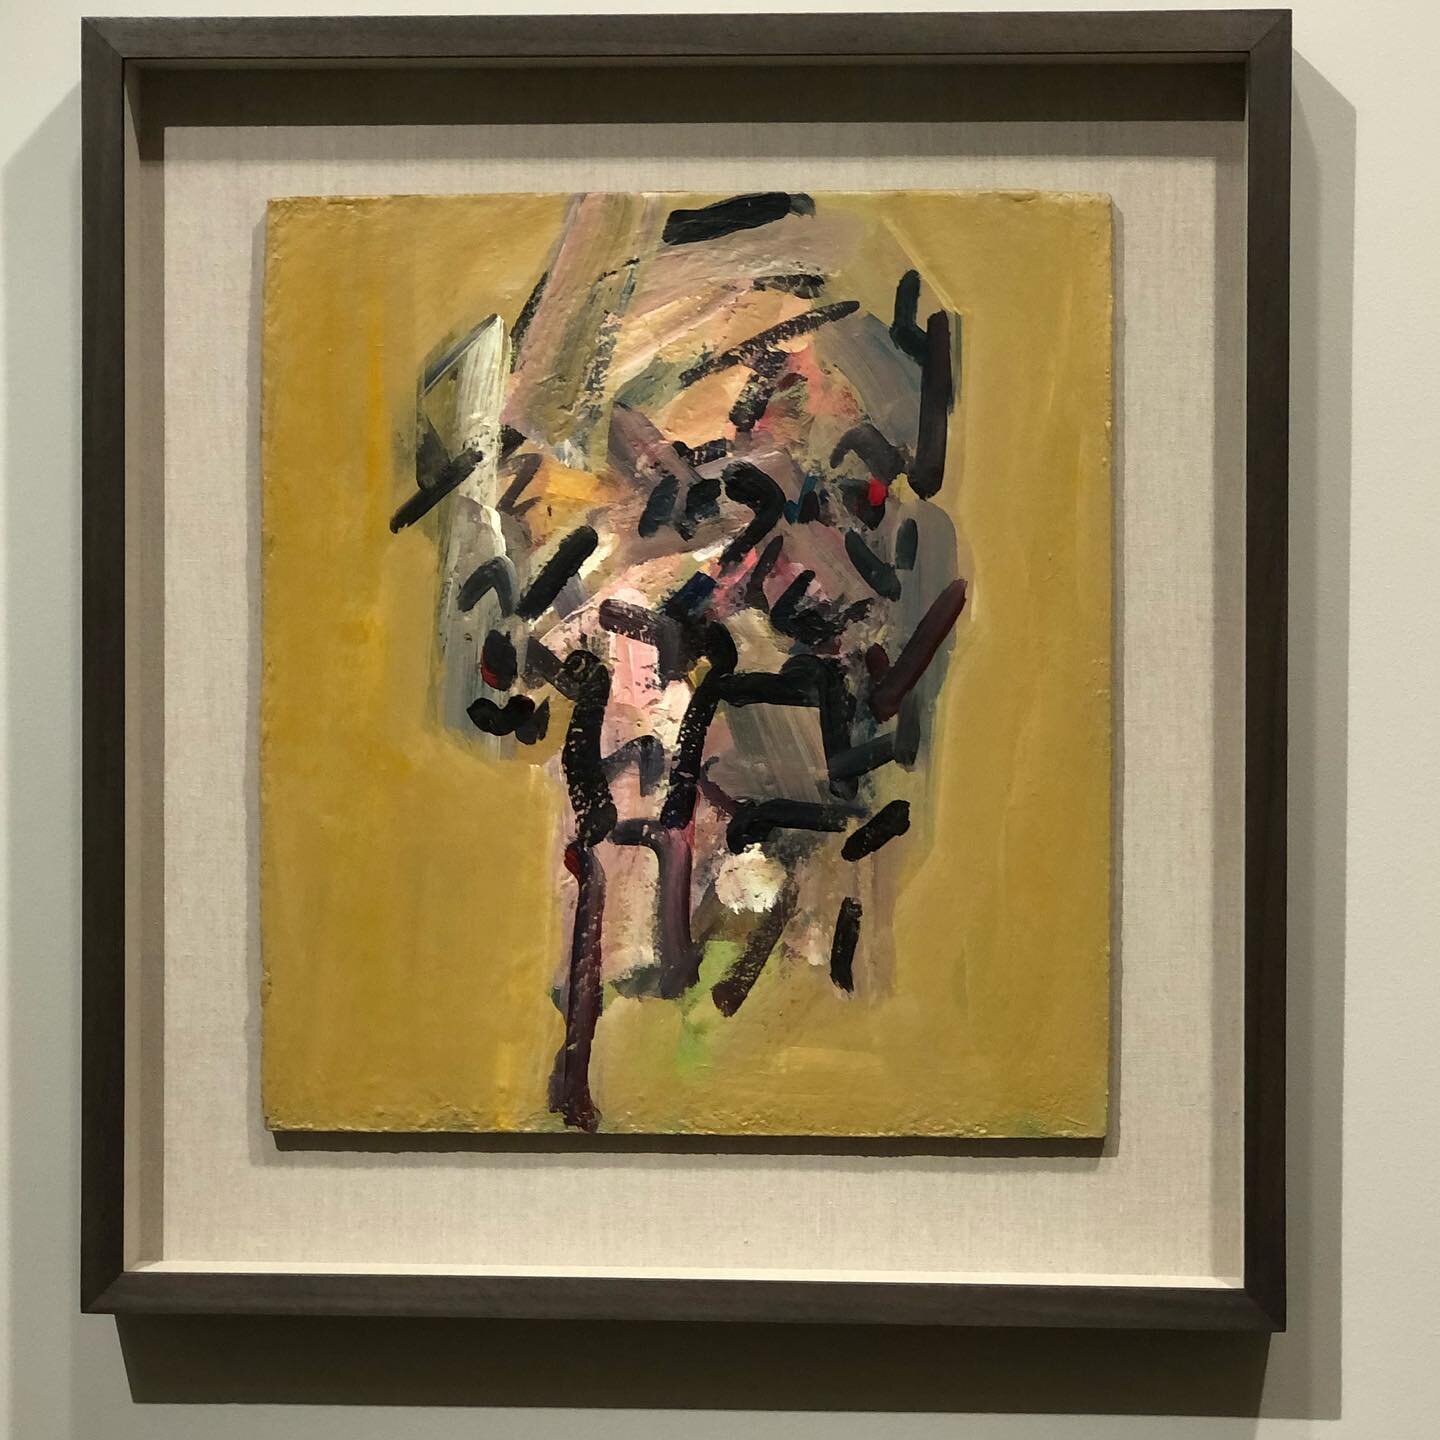 Exquisite show of Frank Auerbach: Twenty Self Portraits at Hazlitt Holland-Hibbert
.
.
.
@hazlitthollandhibbert @frank_auerbach_archive #frankauerbach #selfportrait #artexhibition #stjameslondon #galleryvisit